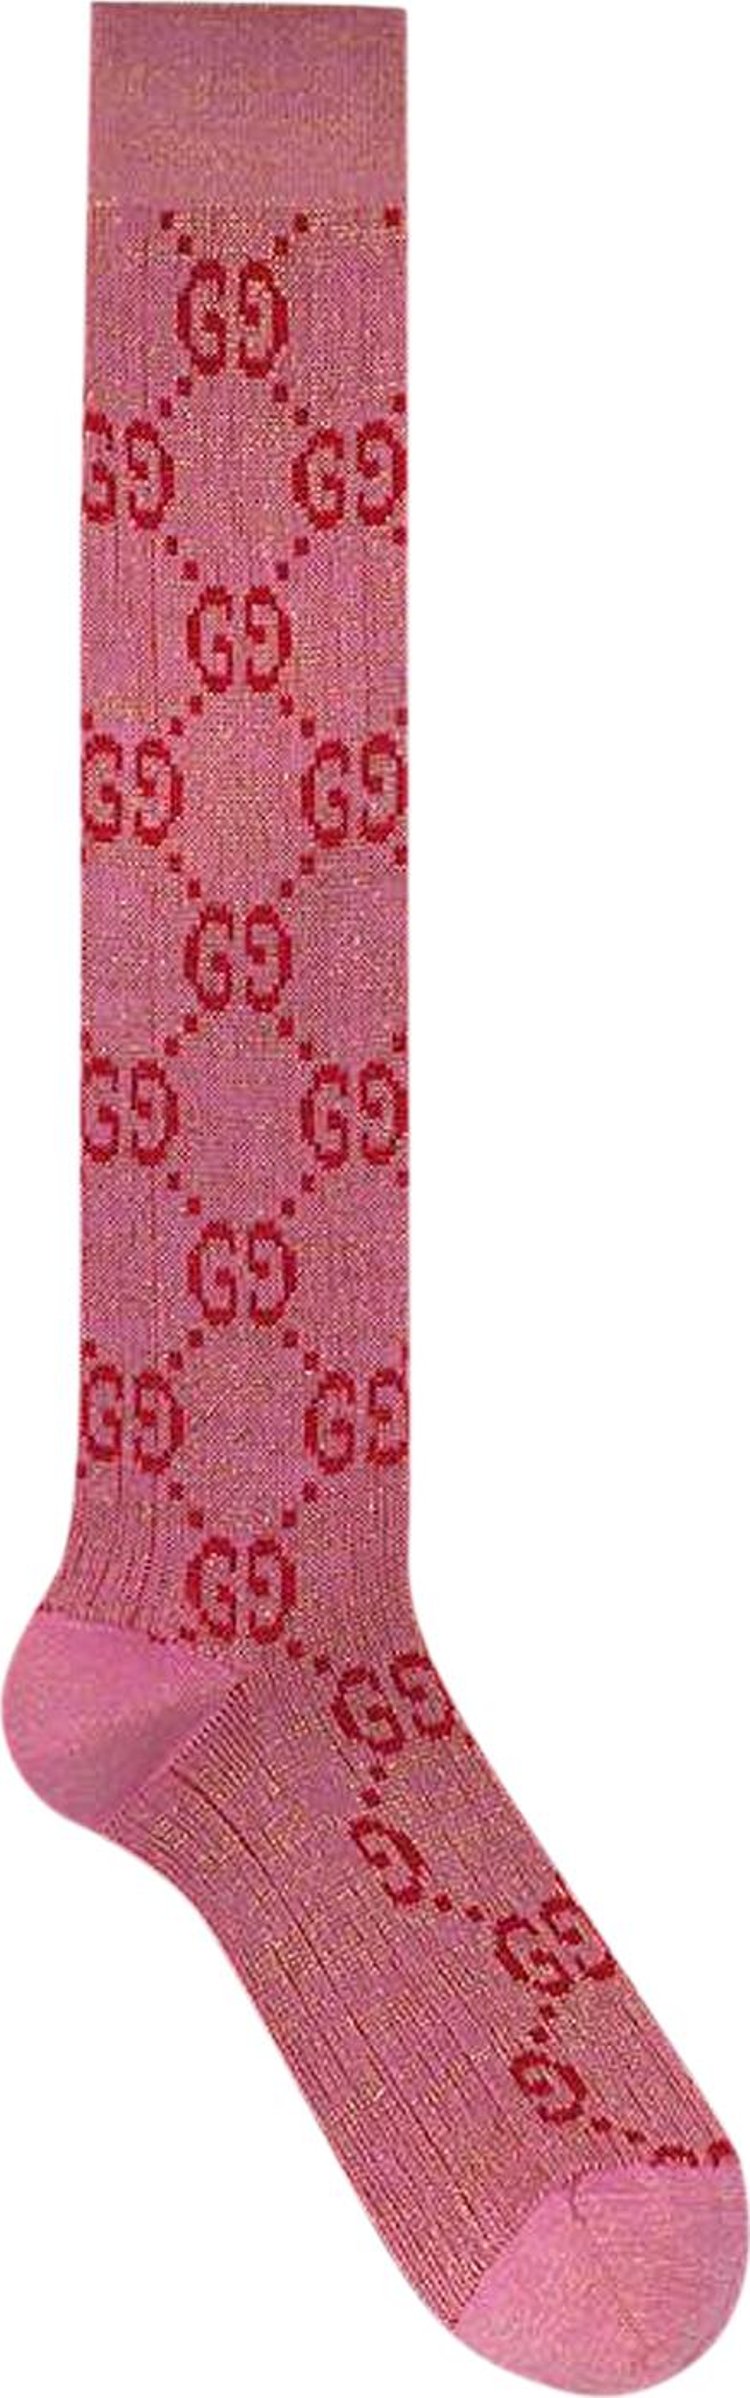 Носки Gucci Cotton GG Socks Roseate/Pink